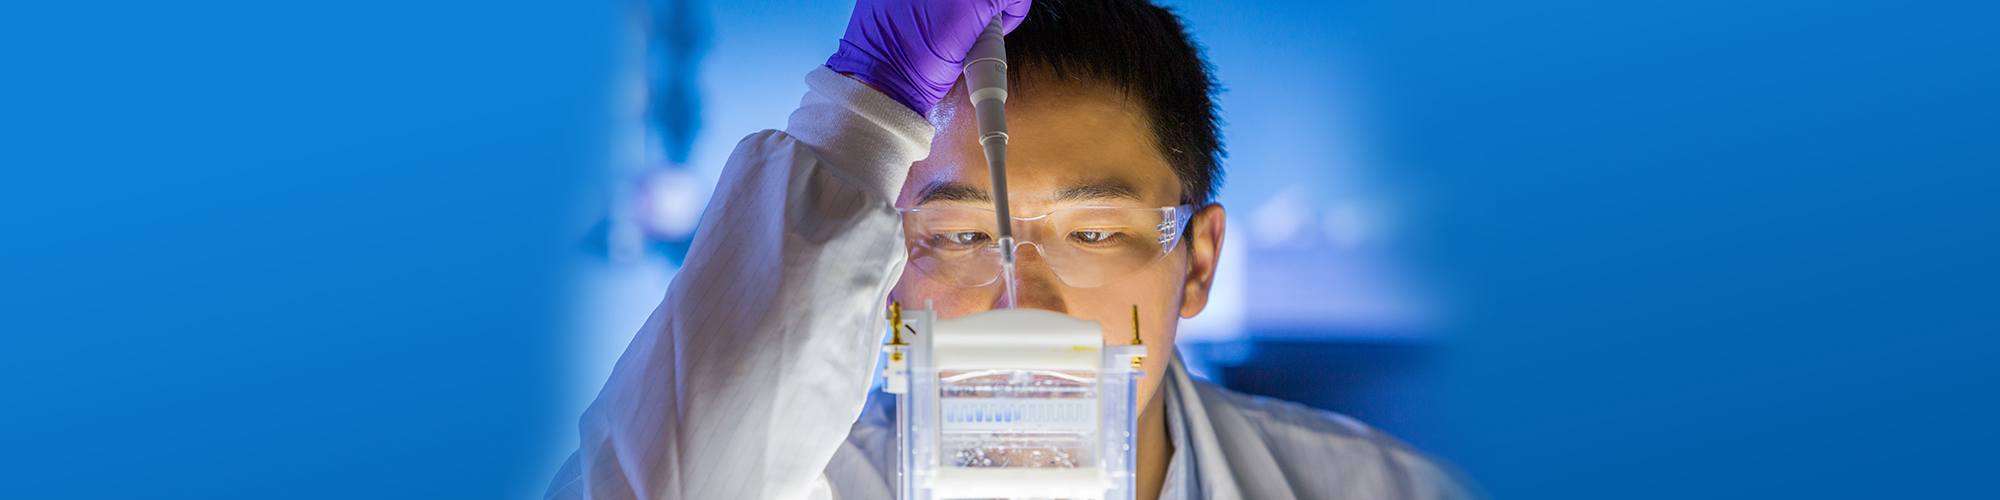 A male scientist using a pipette in a lab